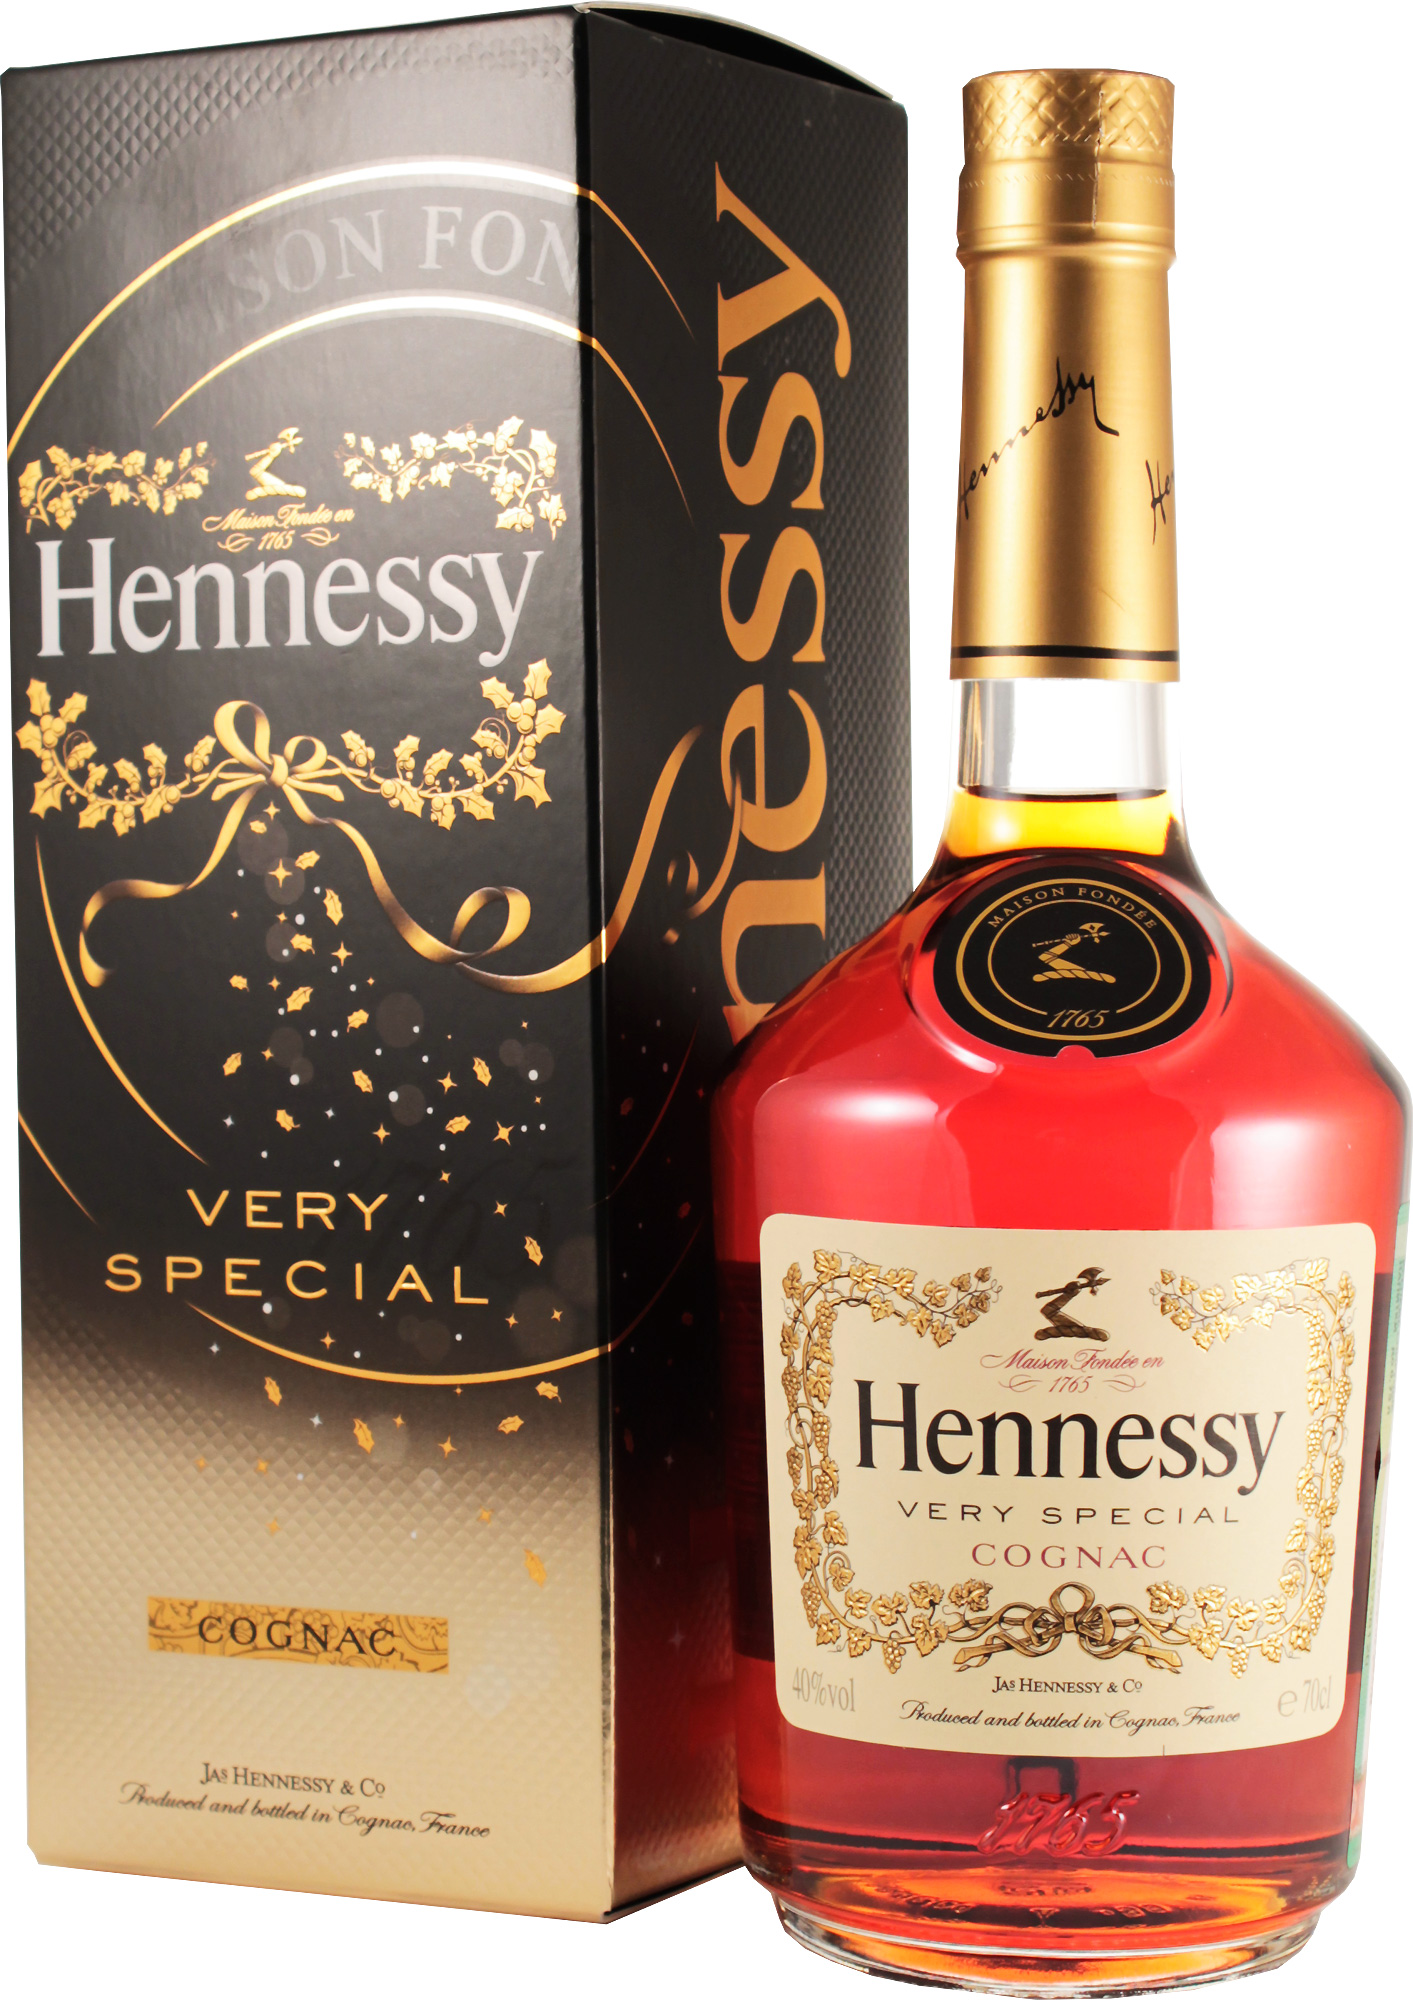 Hennessy cognac цена. Французский коньяк Хеннесси. Hennessy vs Cognac подарочные. Hennessy vs 0.7. Коньяк "Hennessy vs" ( Хеннесси вс).